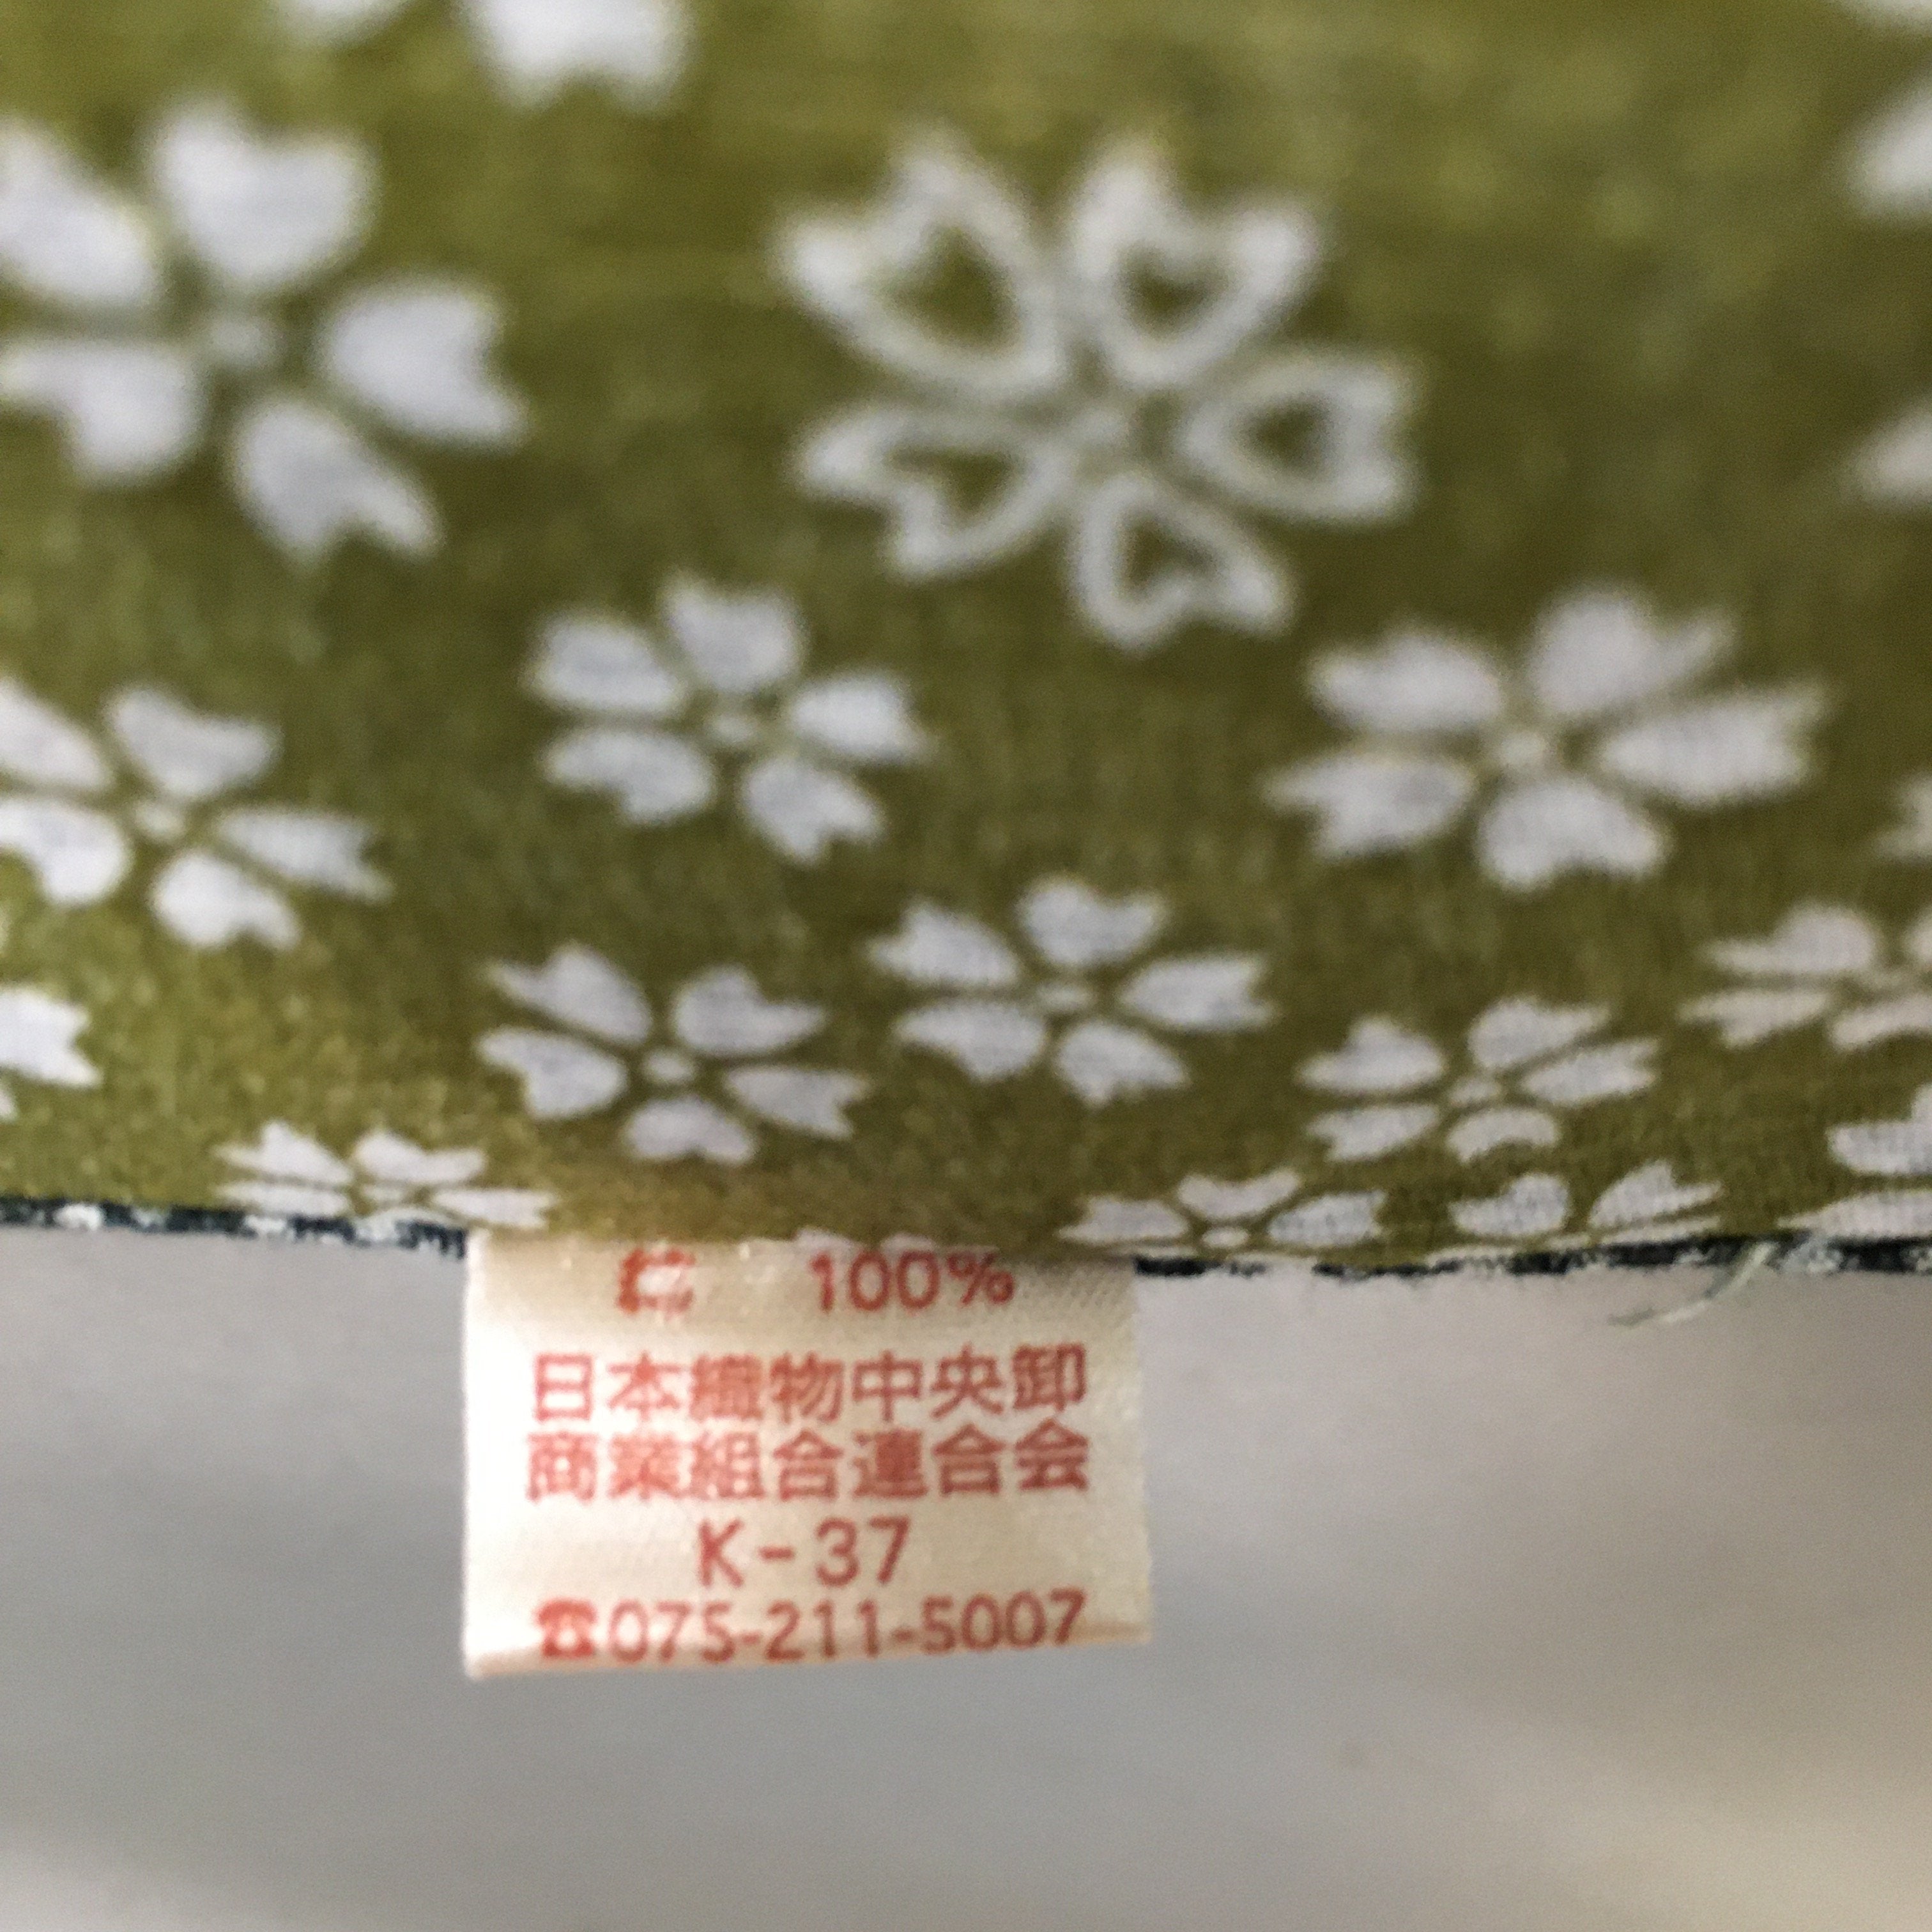 Japanese Wrap Cloth Furoshiki Fabric Cotton Blue Green Dots Flowers FU135